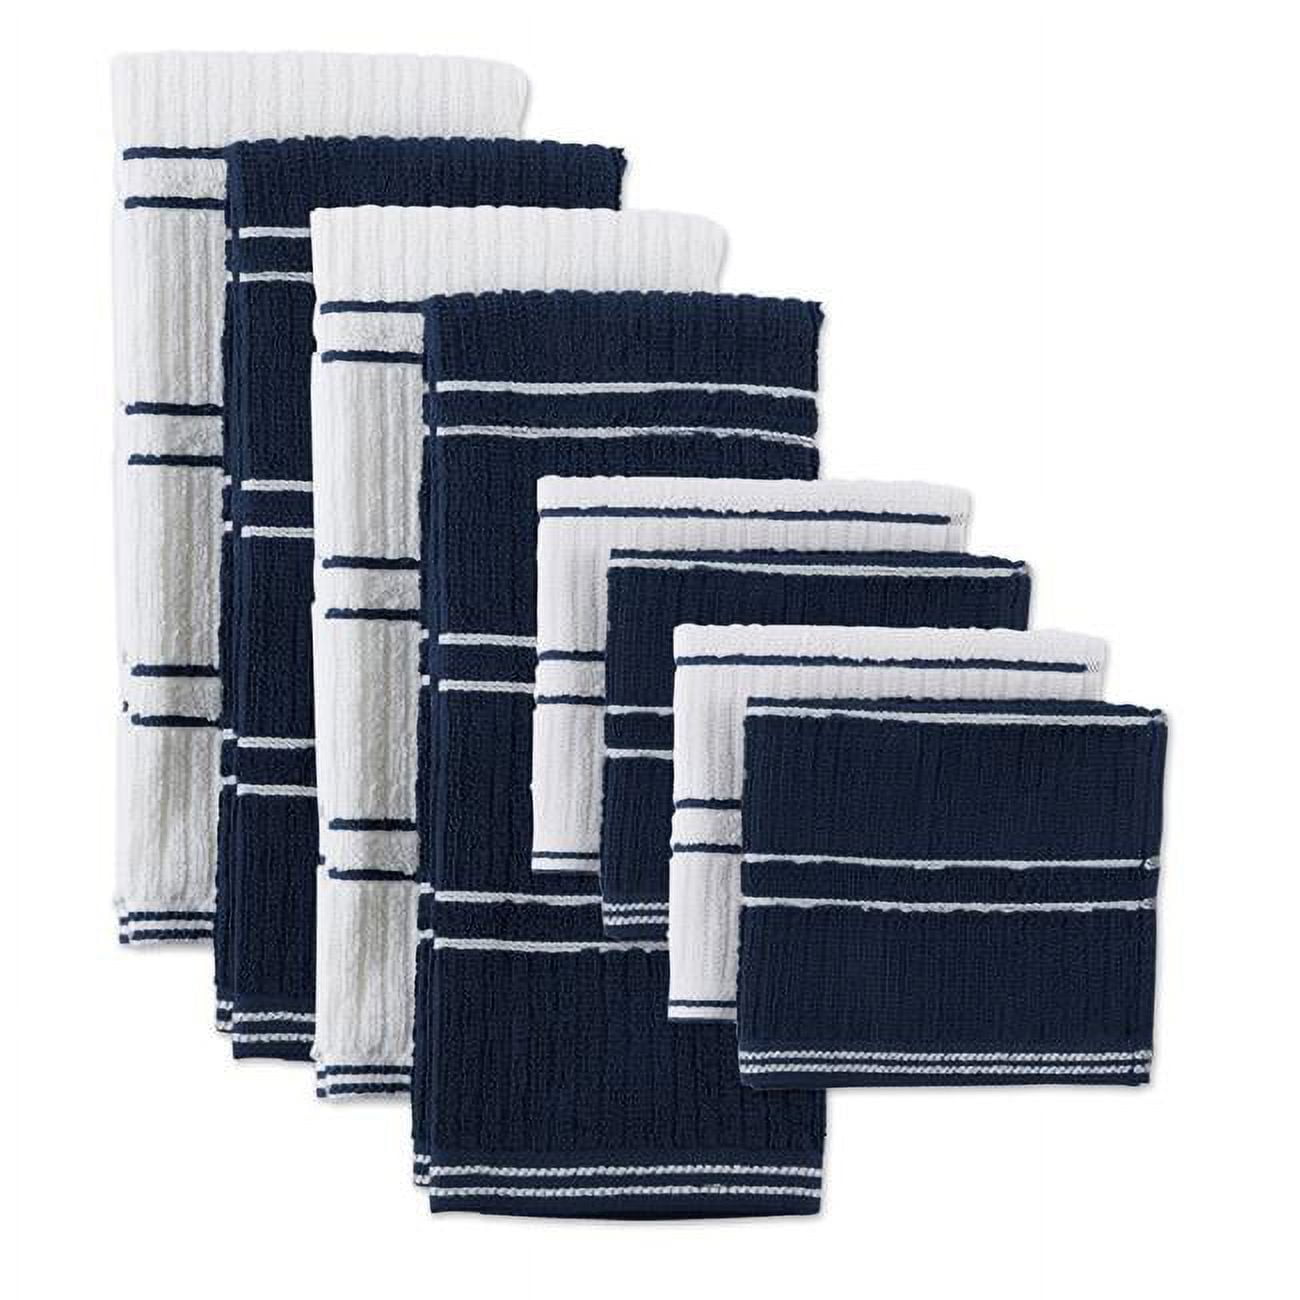 Design Imports 70317a Blue Ribbed Terry Dishtowel Dishcloth - Set Of 8